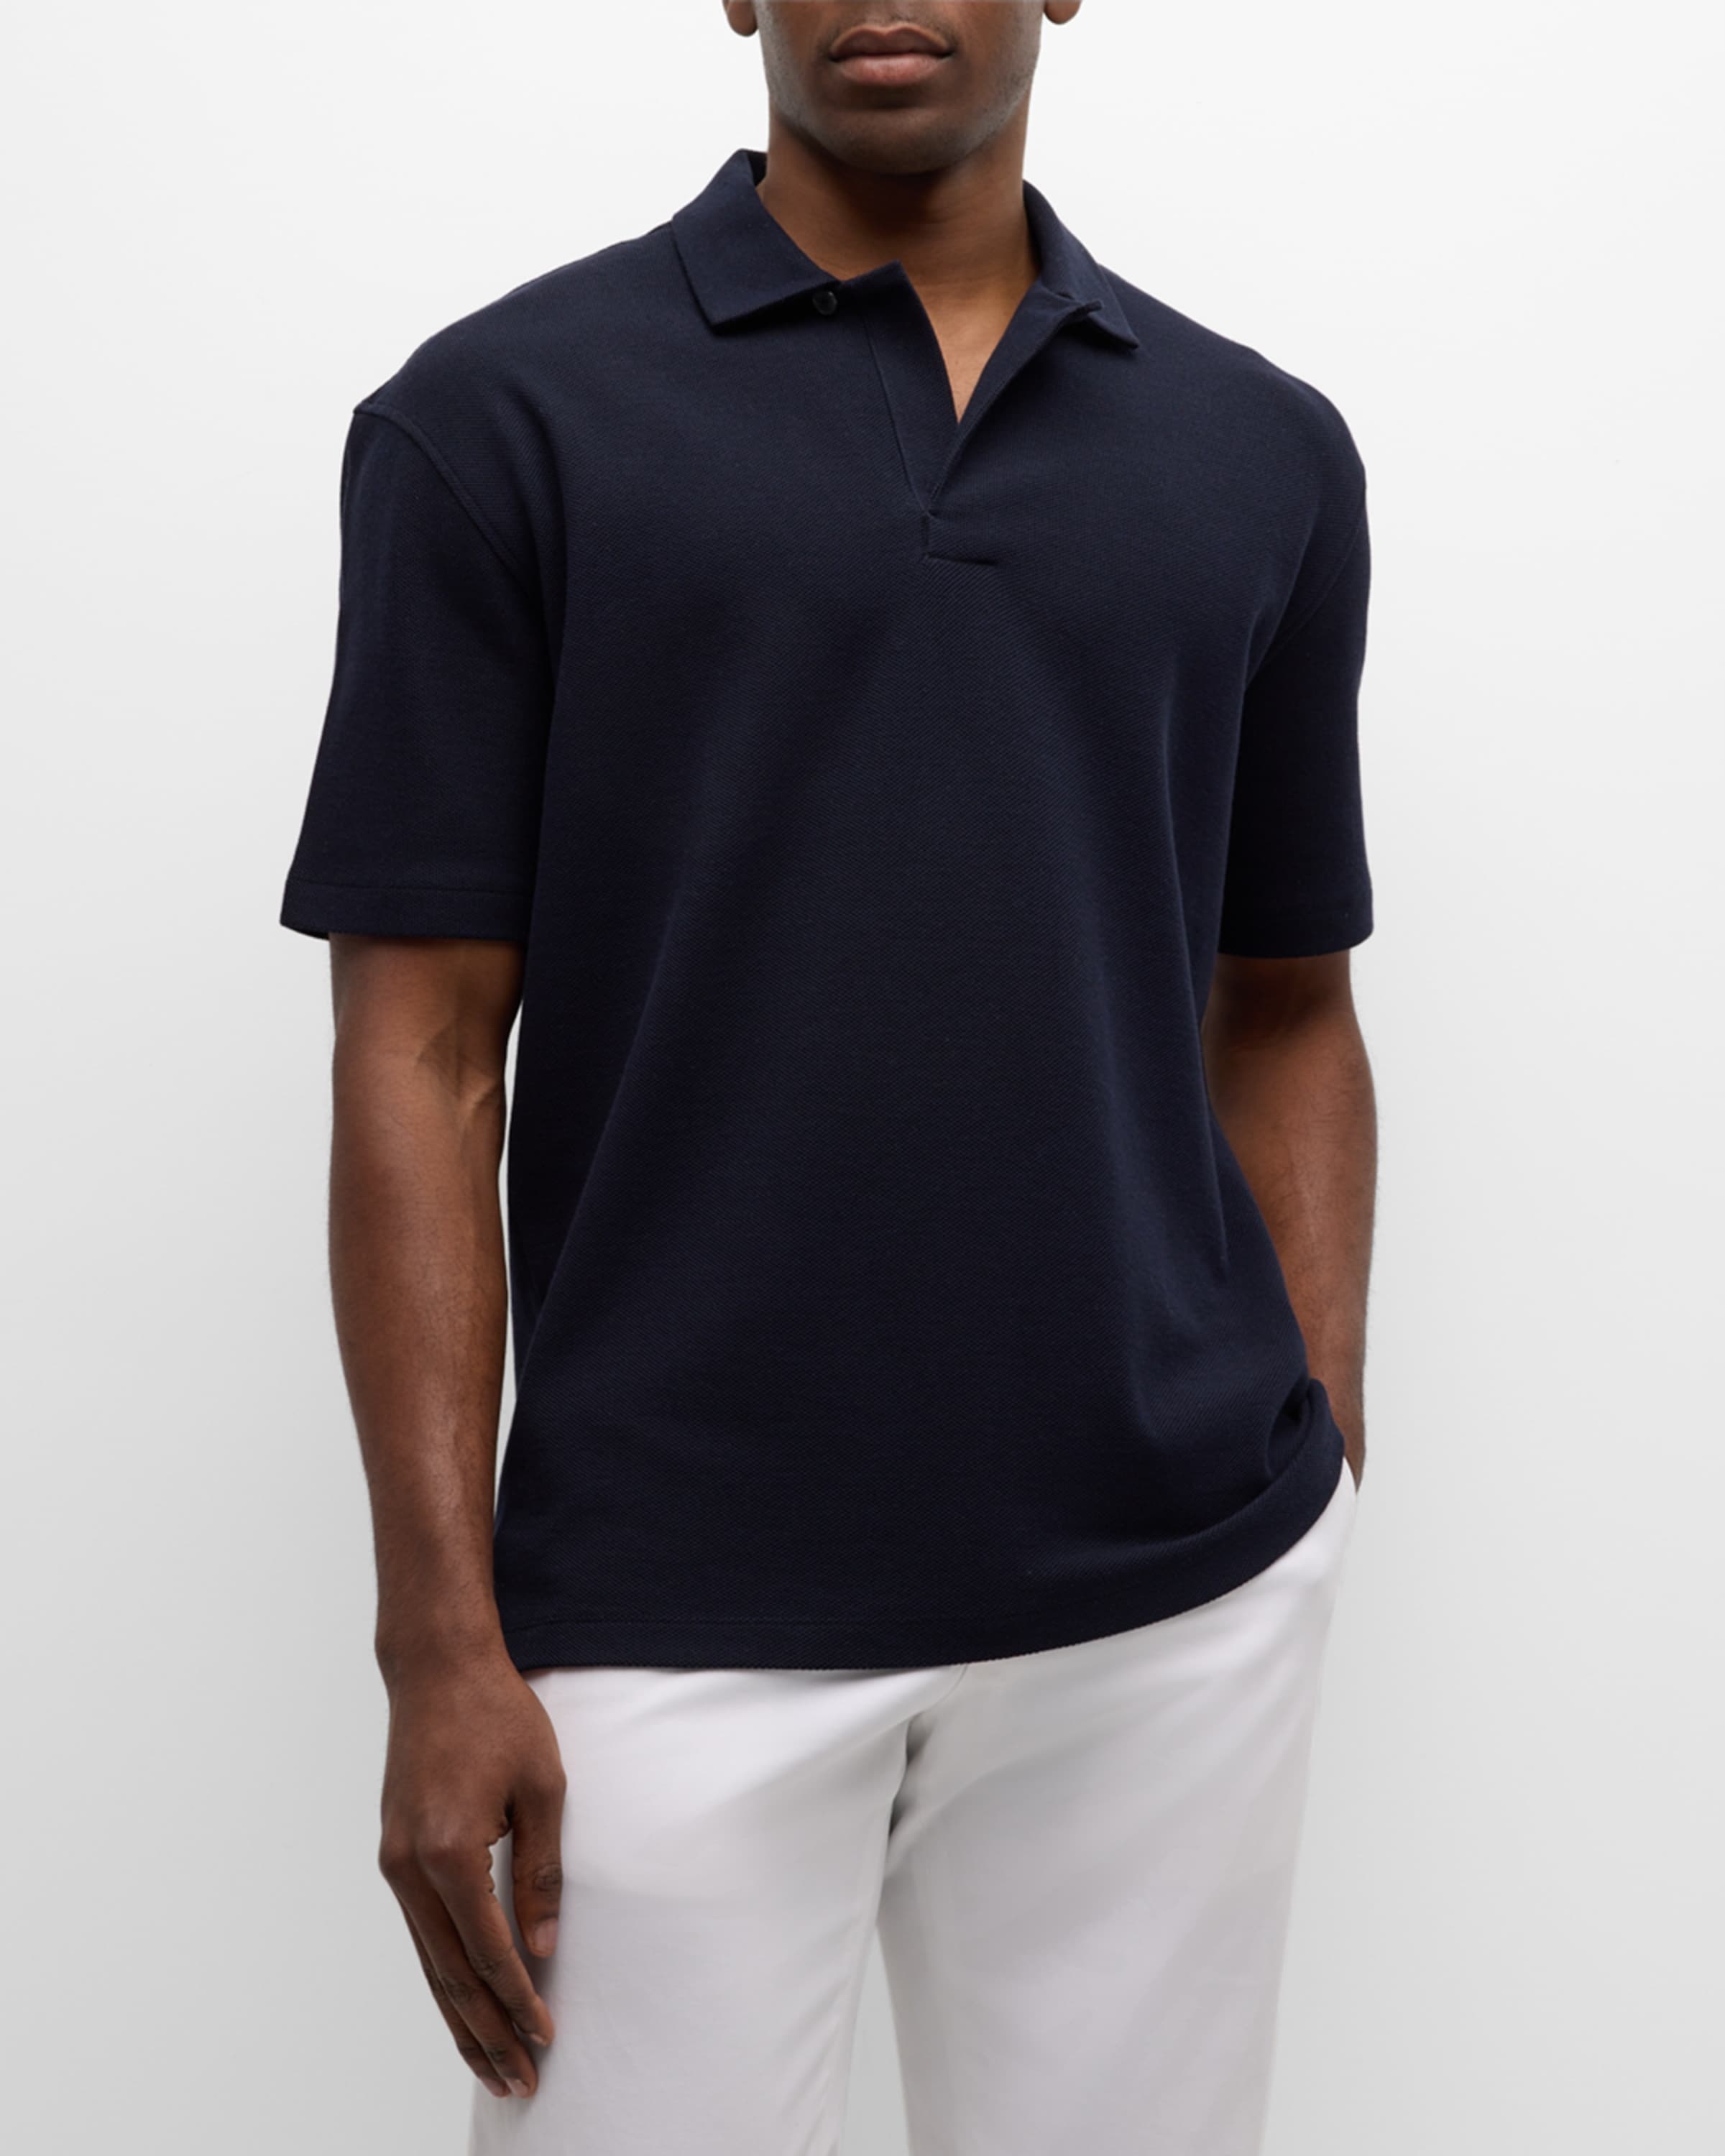 Men's Cotton Honeycomb Polo Shirt - 2